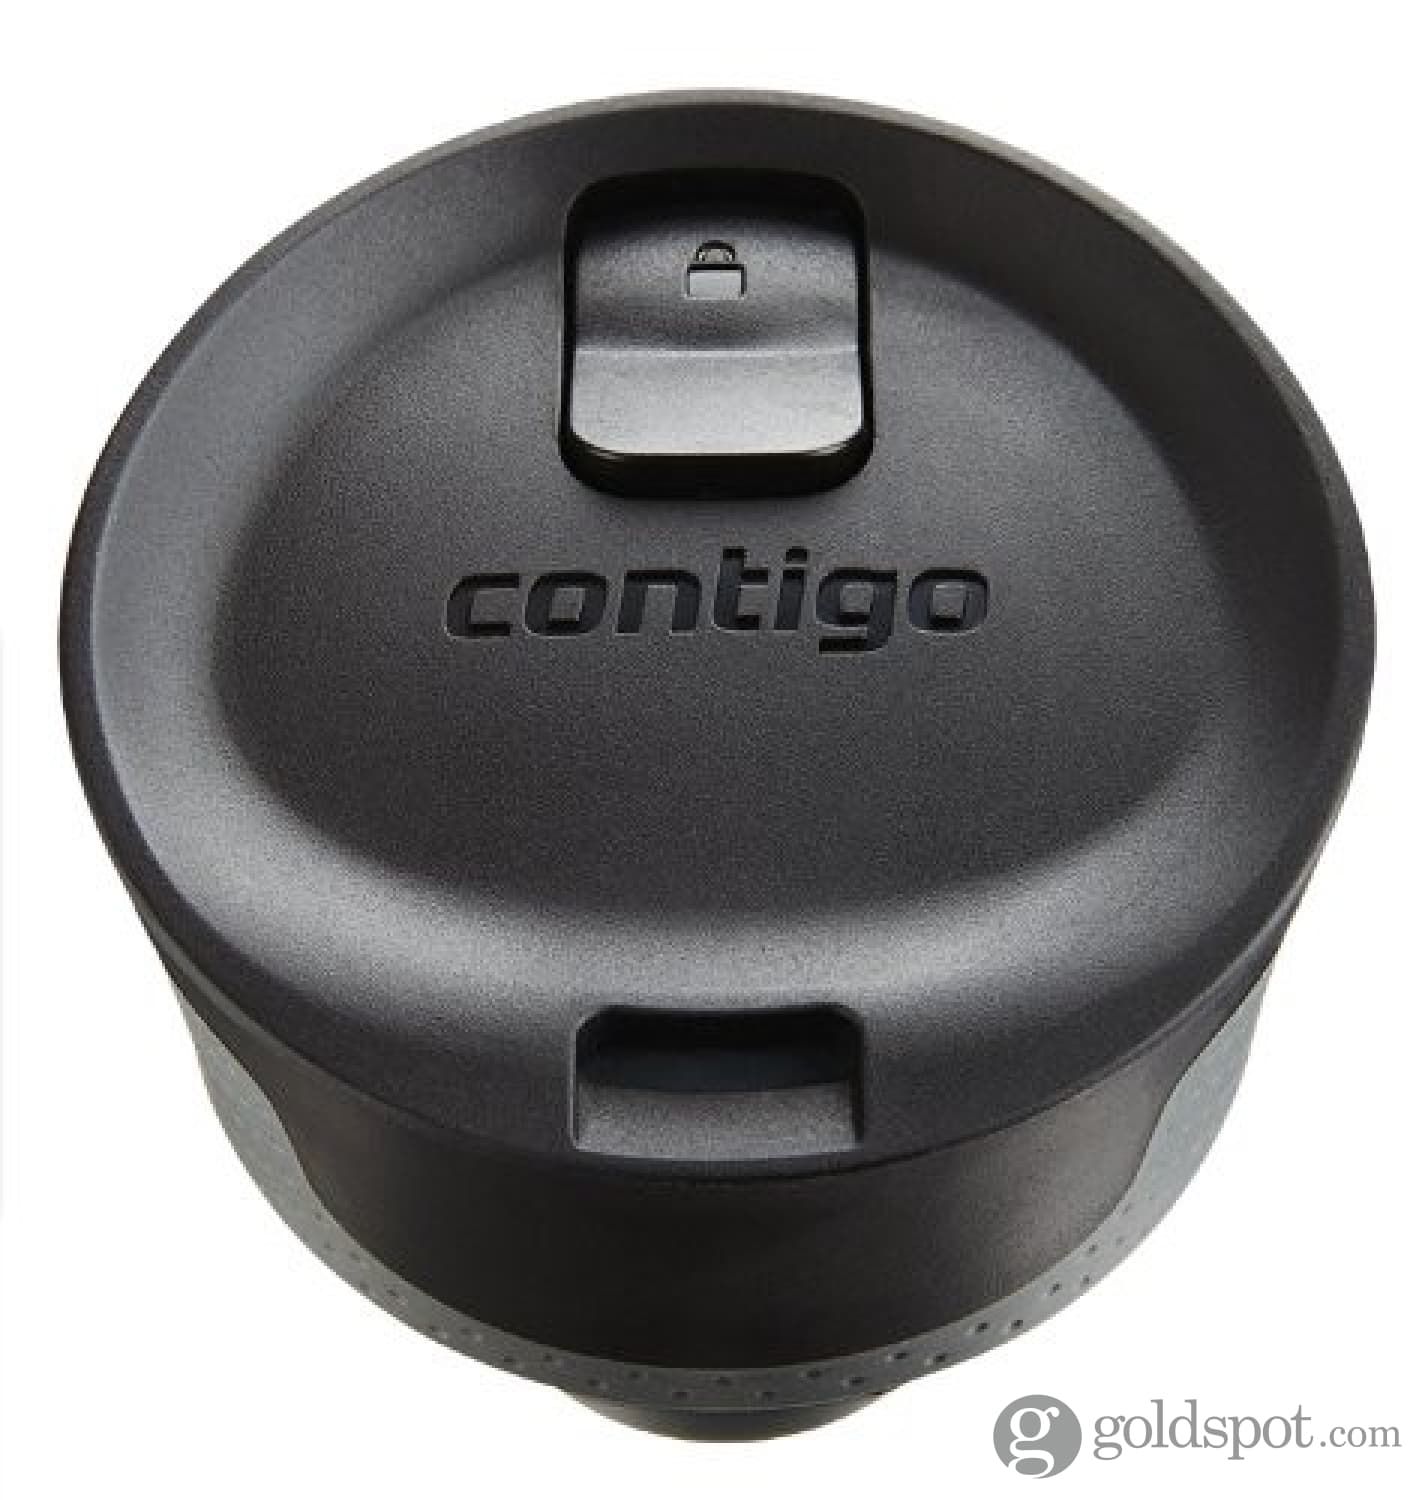 Contigo Autoseal West Loop Stainless Steel Coffee Travel Mug, Black, 16 oz